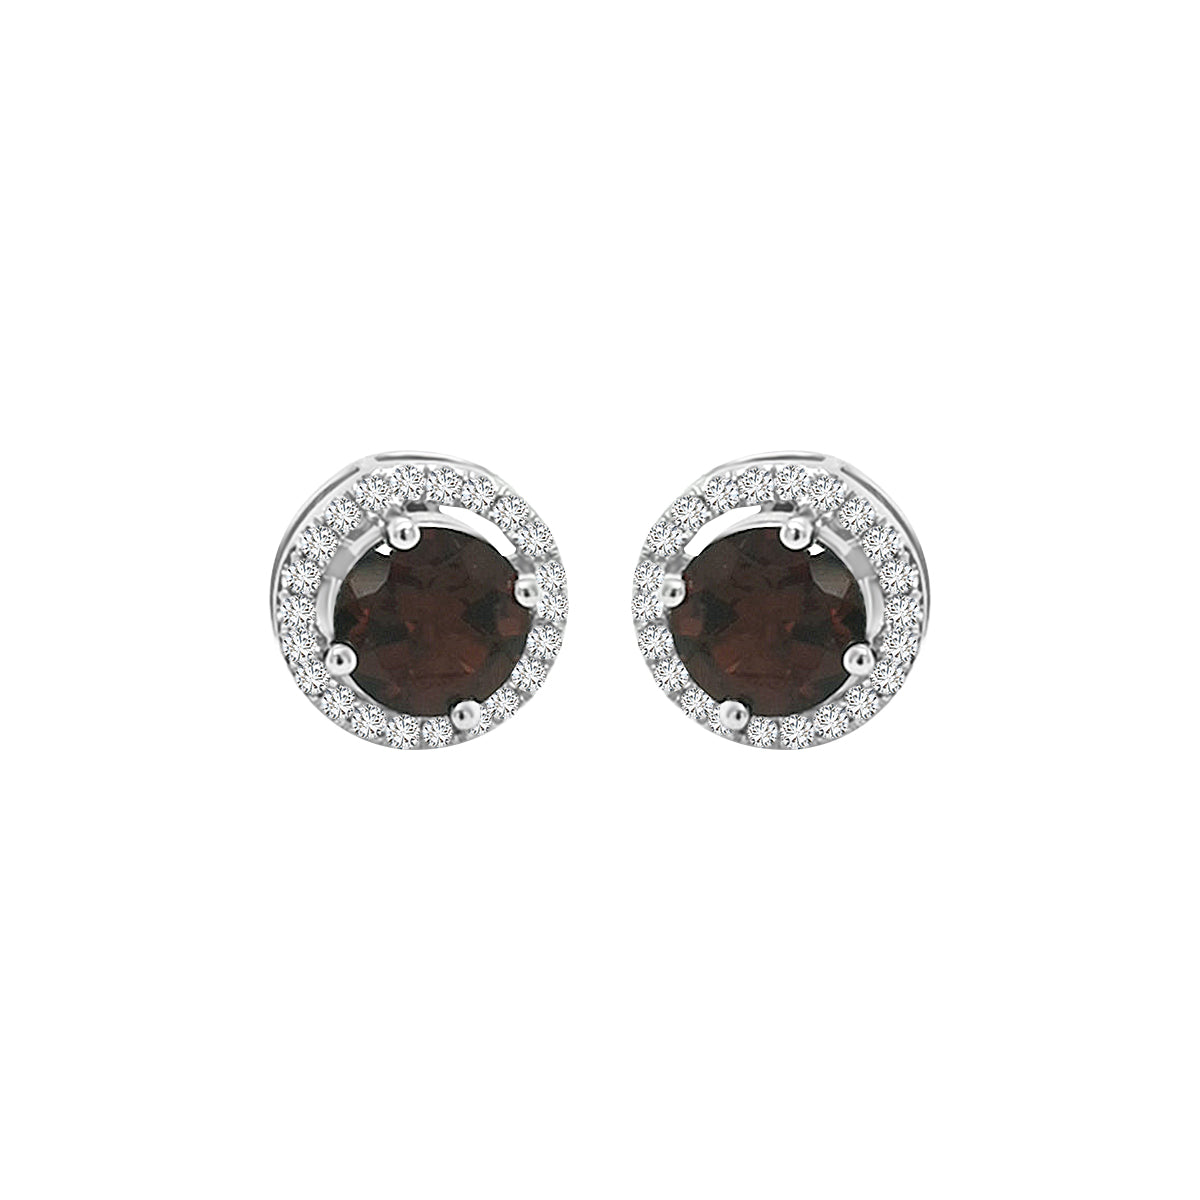 Garnet With Diamond Halo Stud Earrings In 18k White Gold.